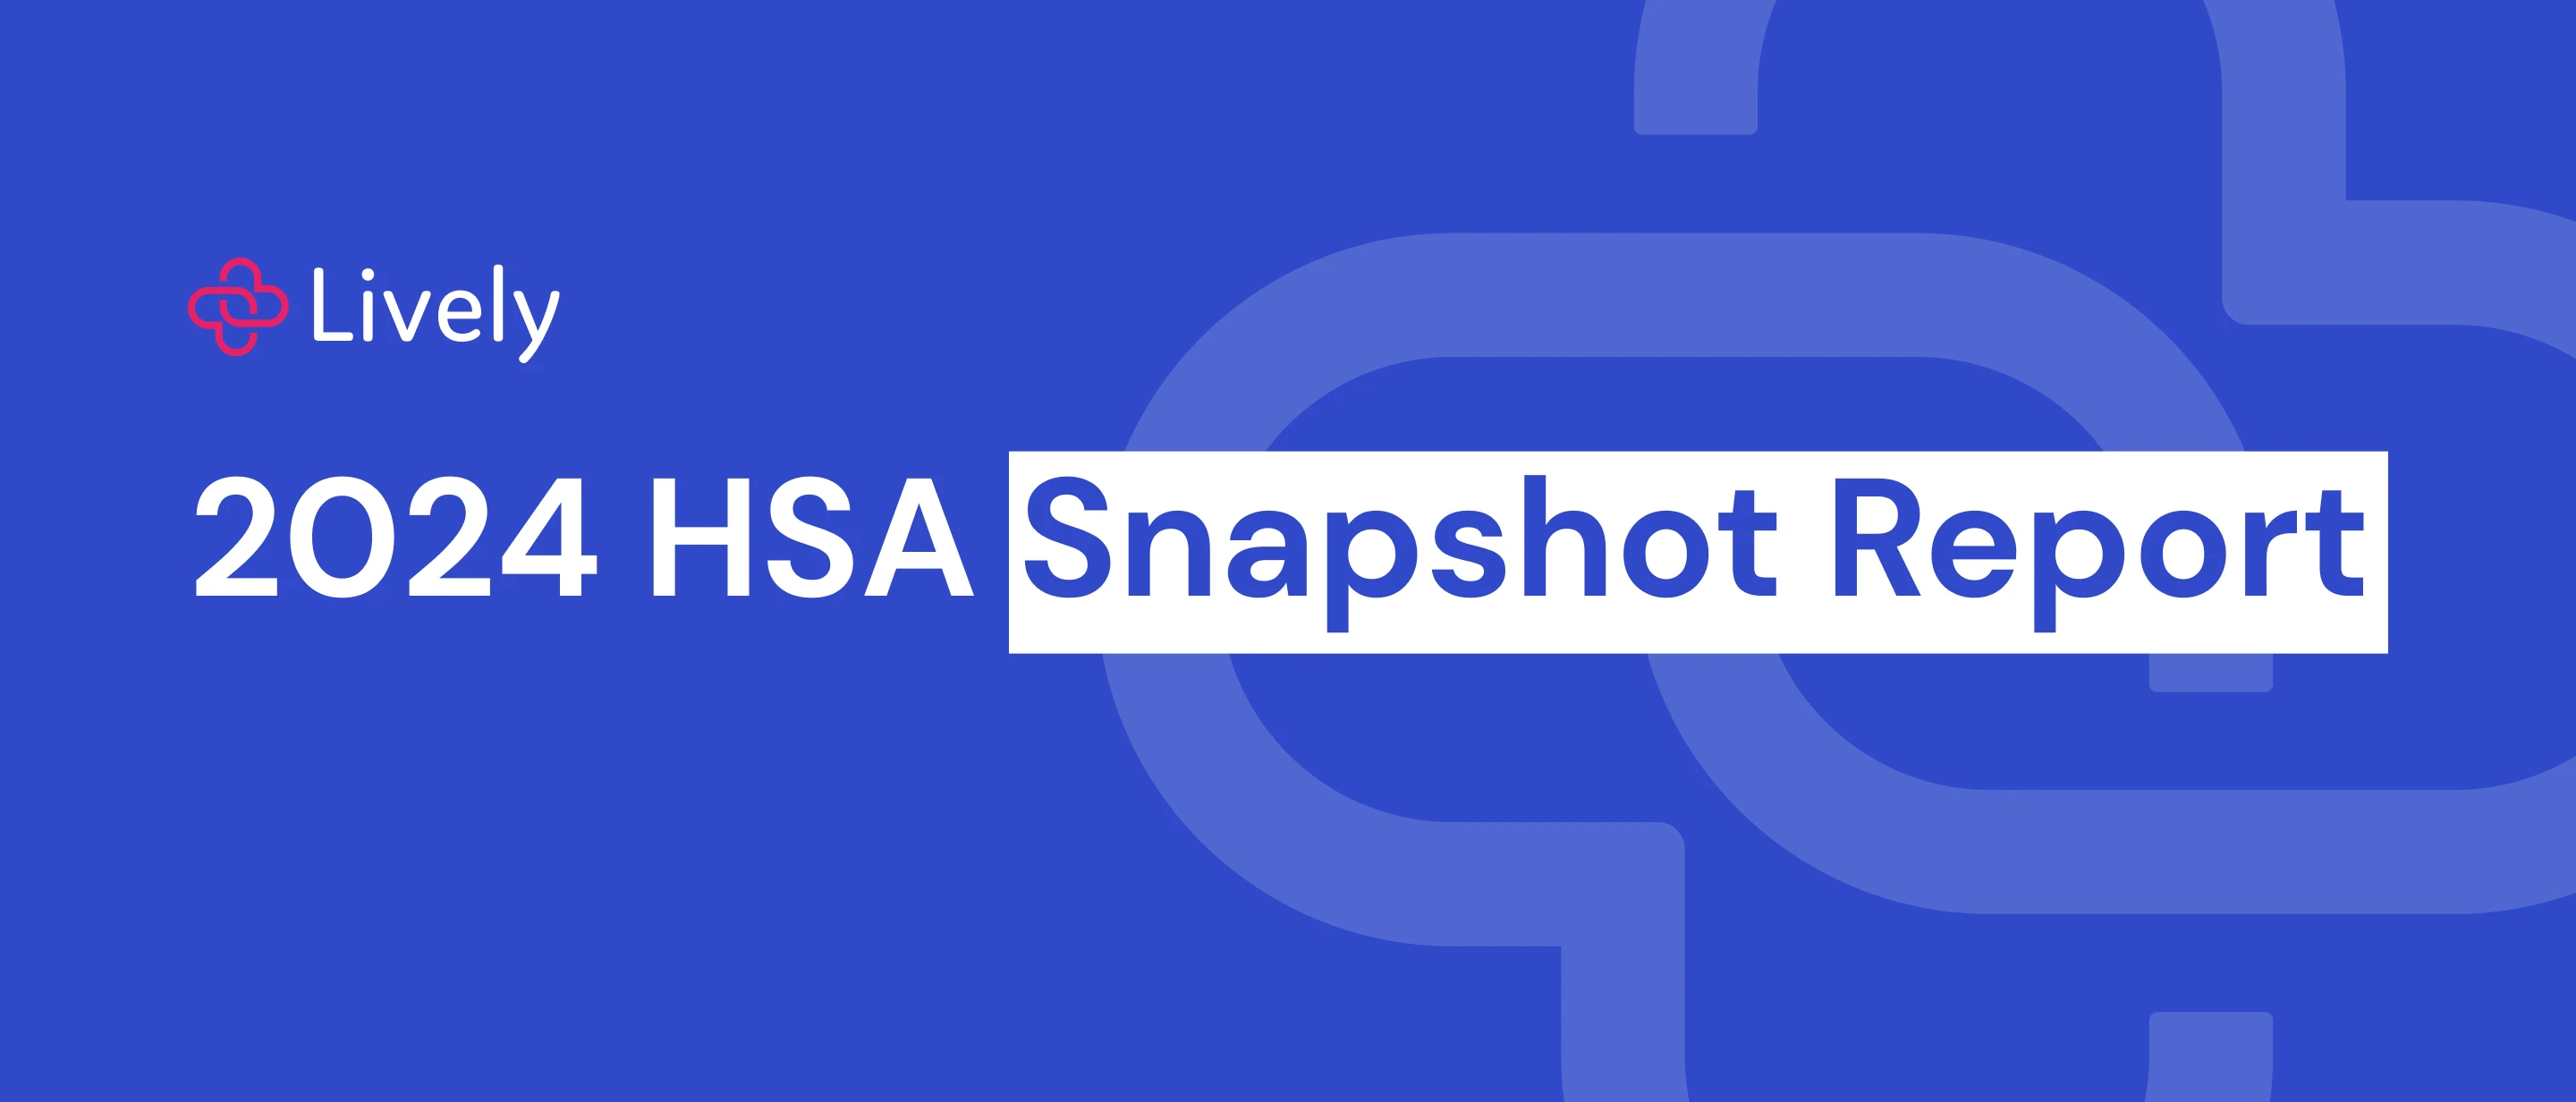 Blog HSA Snapsnot Report Images - Header